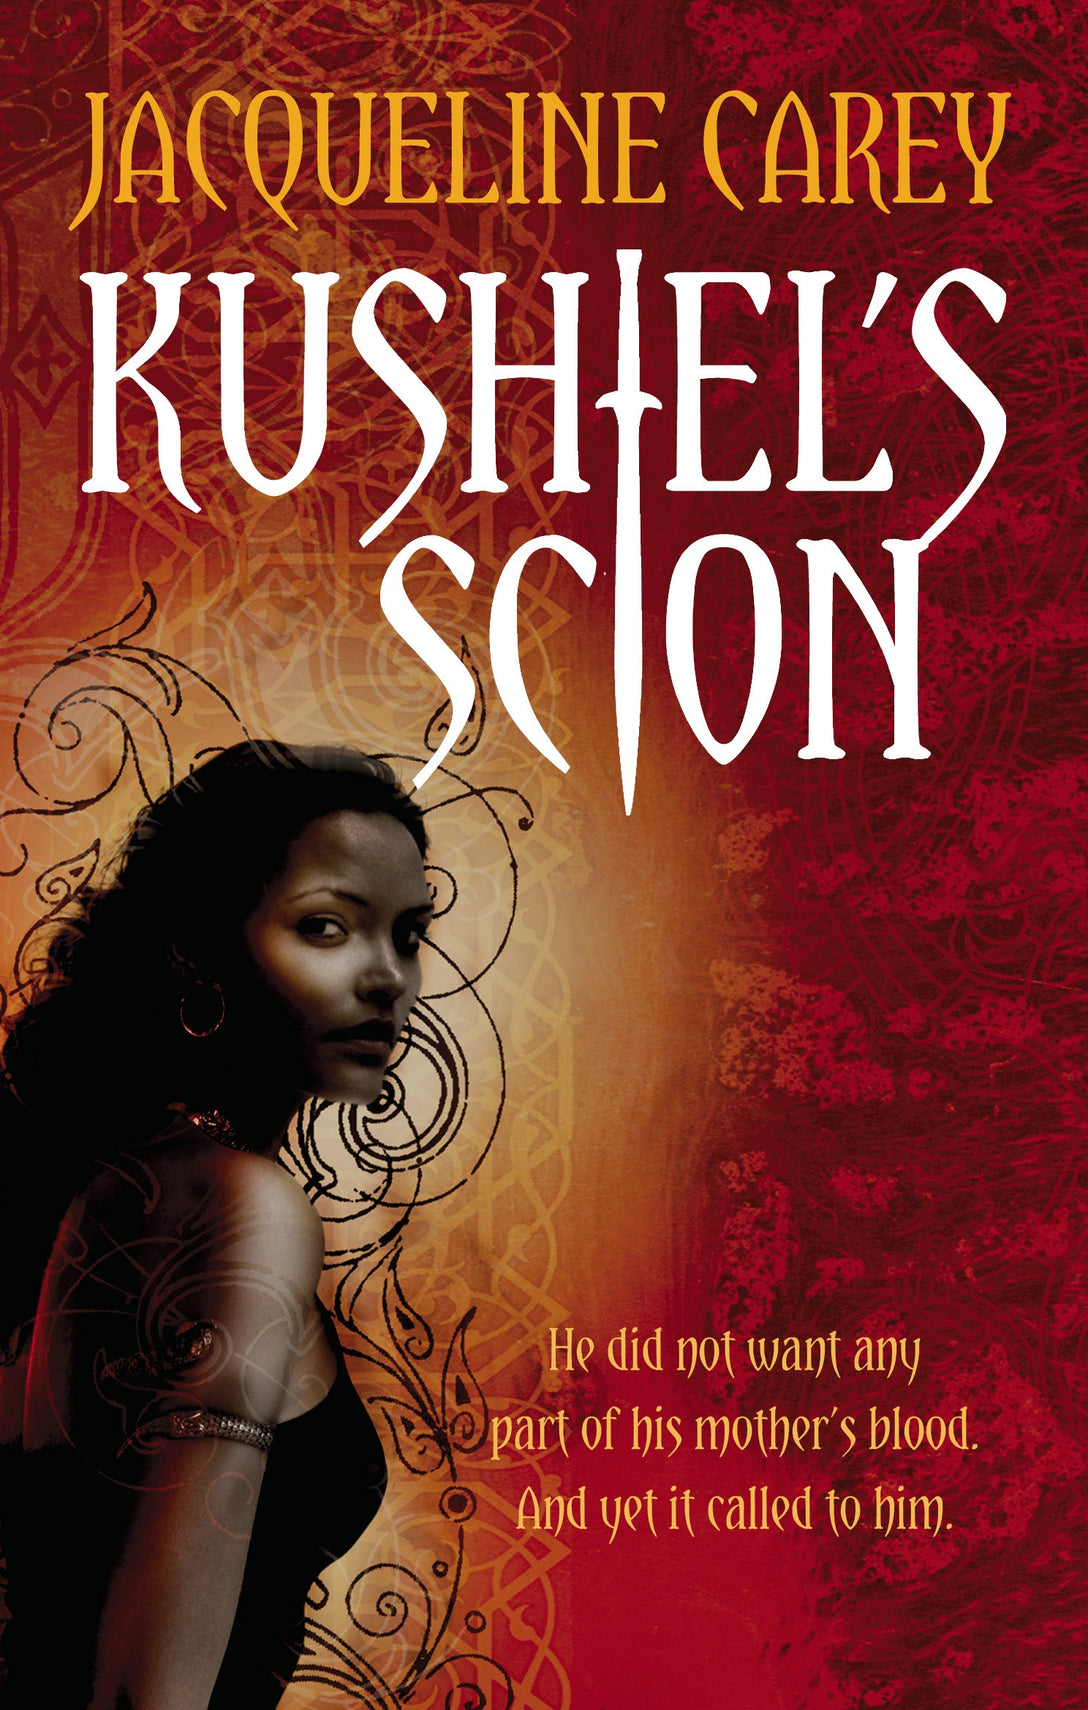 Kushiel's Scion by Jacqueline Carey